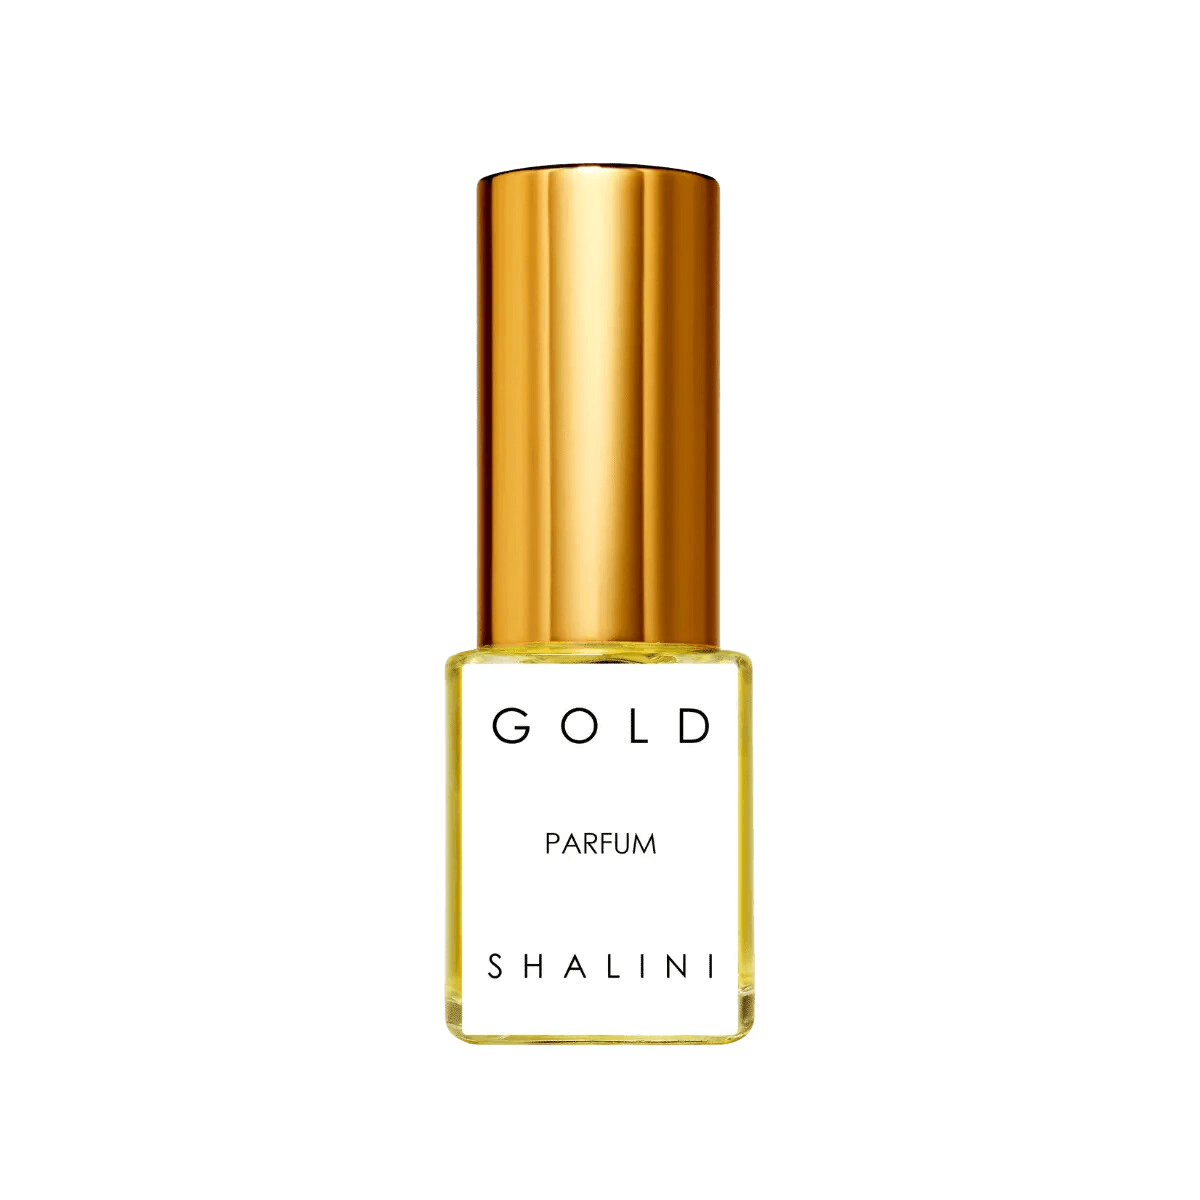 Shalini - GOLD parfum spray bottle